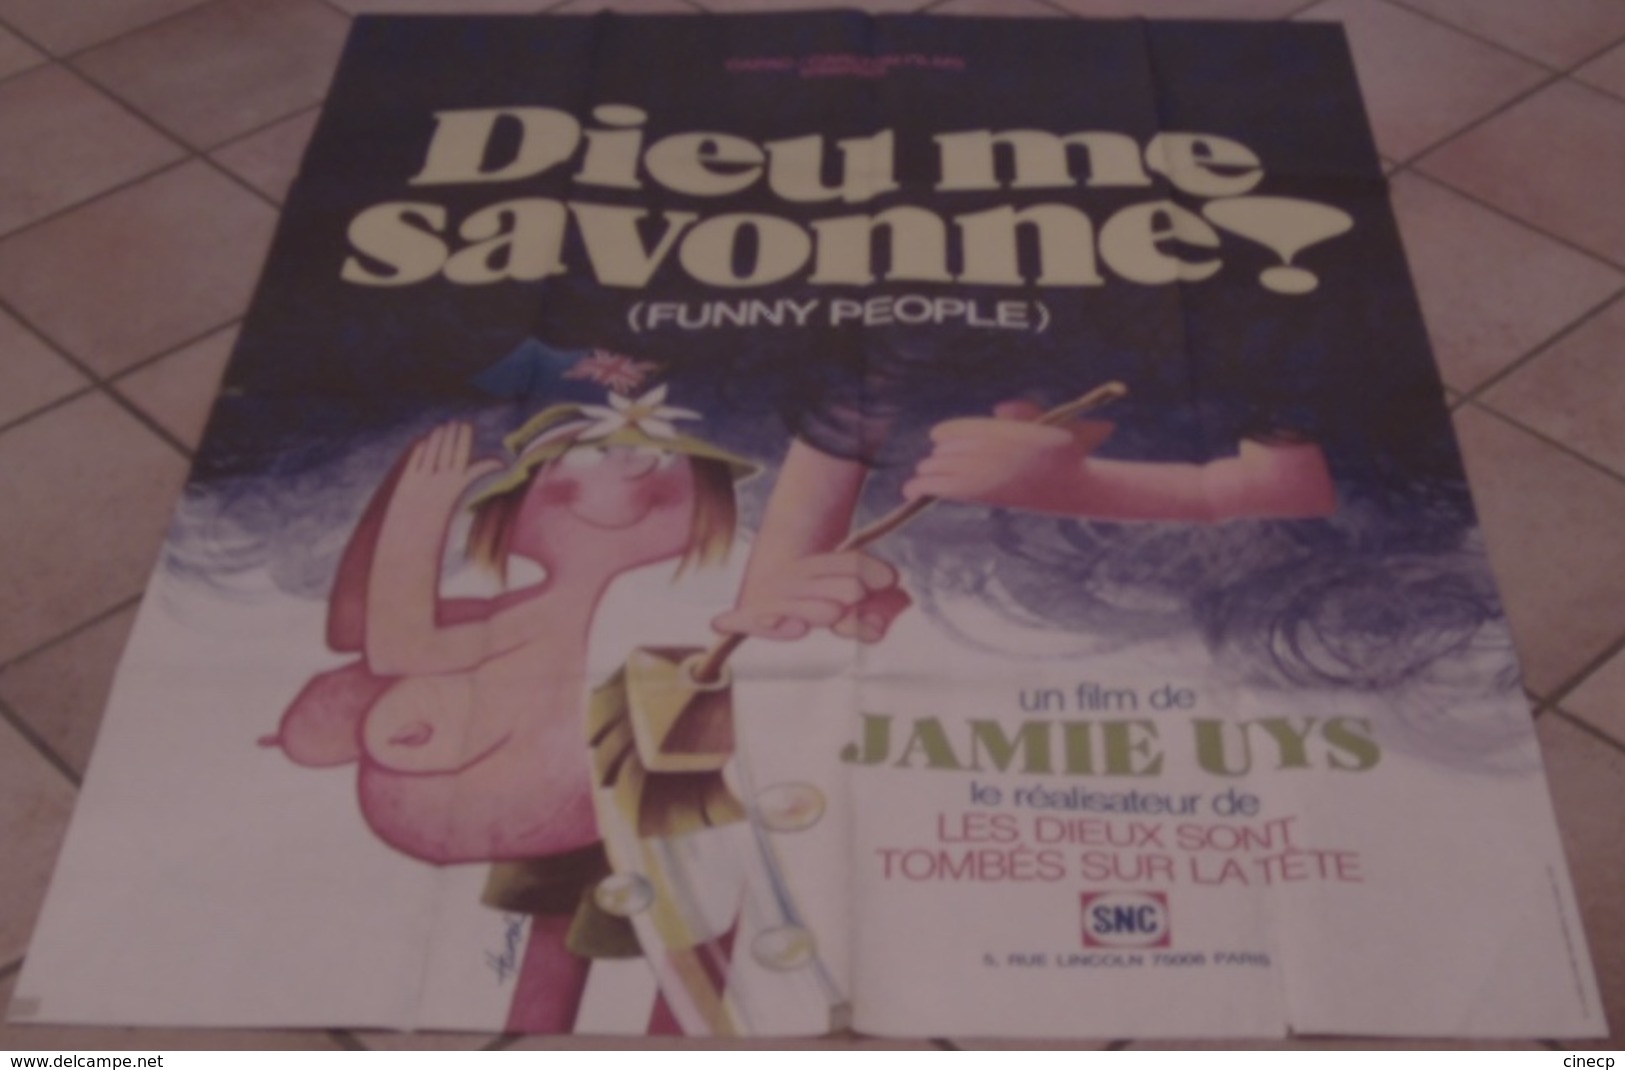 AFFICHE CINEMA ORIGINALE FILM DIEU ME SAVONNE ! ( FUNNY PEOPLE ) - Jamie UYS TB DESSIN HUREL 1983 - Affiches & Posters